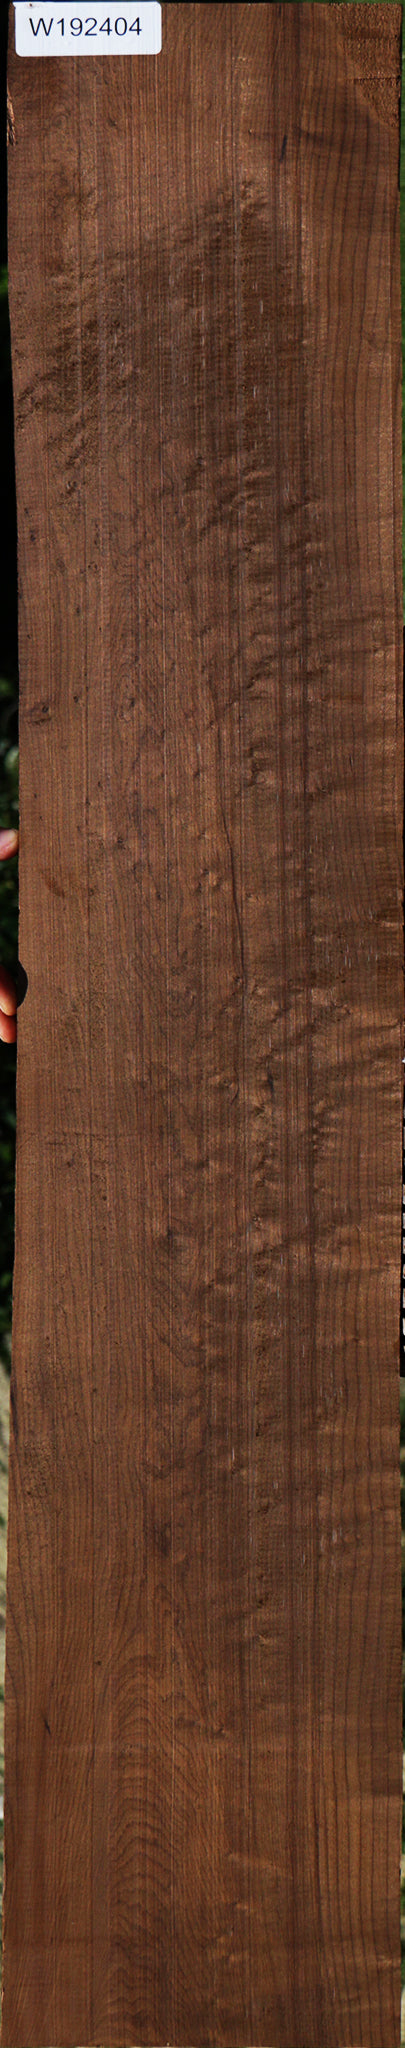 Extra Fancy Birdseye Curly Caramelized Maple Lumber